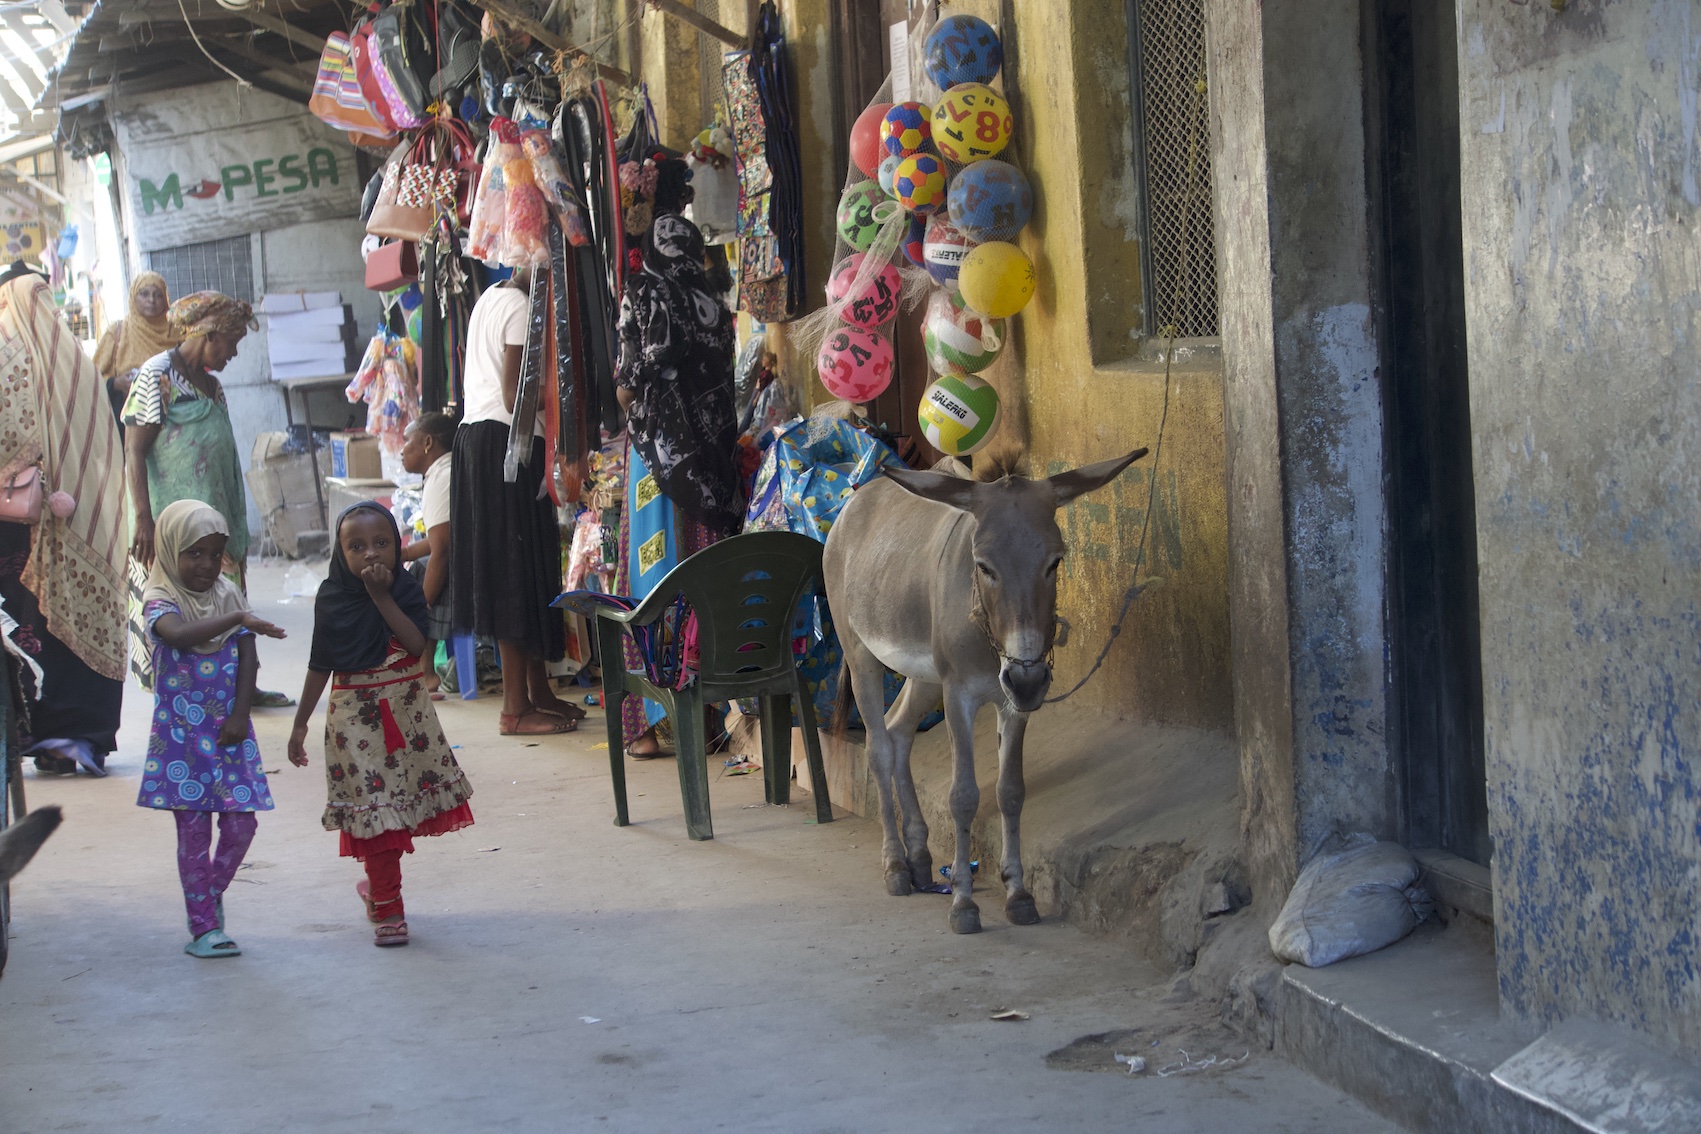 Two girls walking and a donkey in Lamu island street